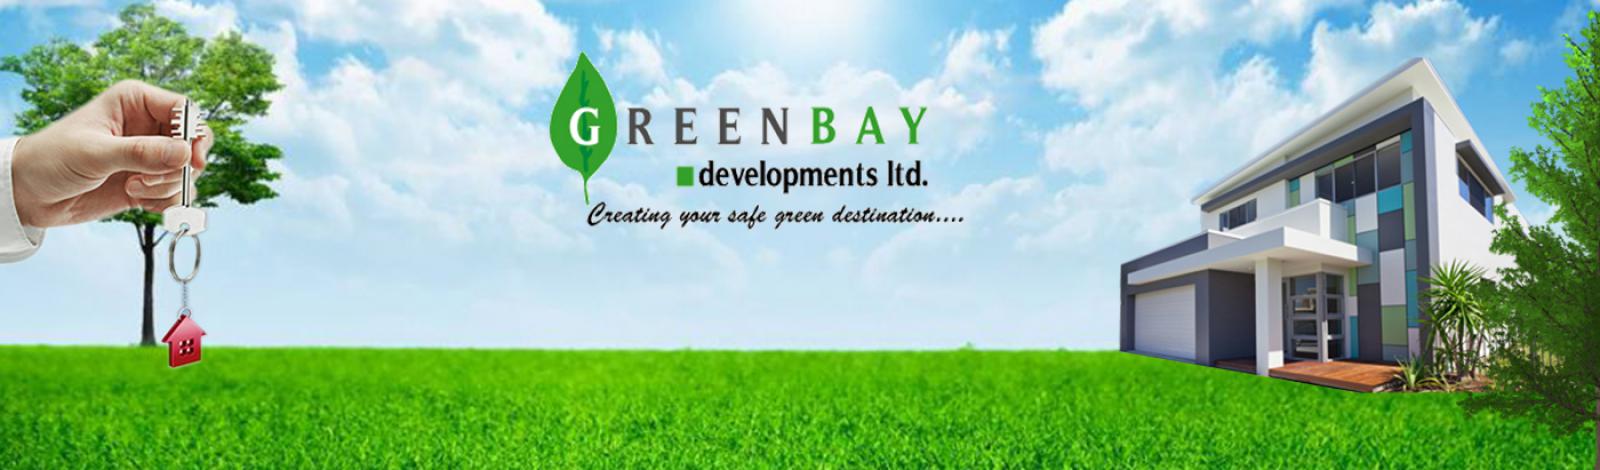 Green Bay Developments Ltd. banner